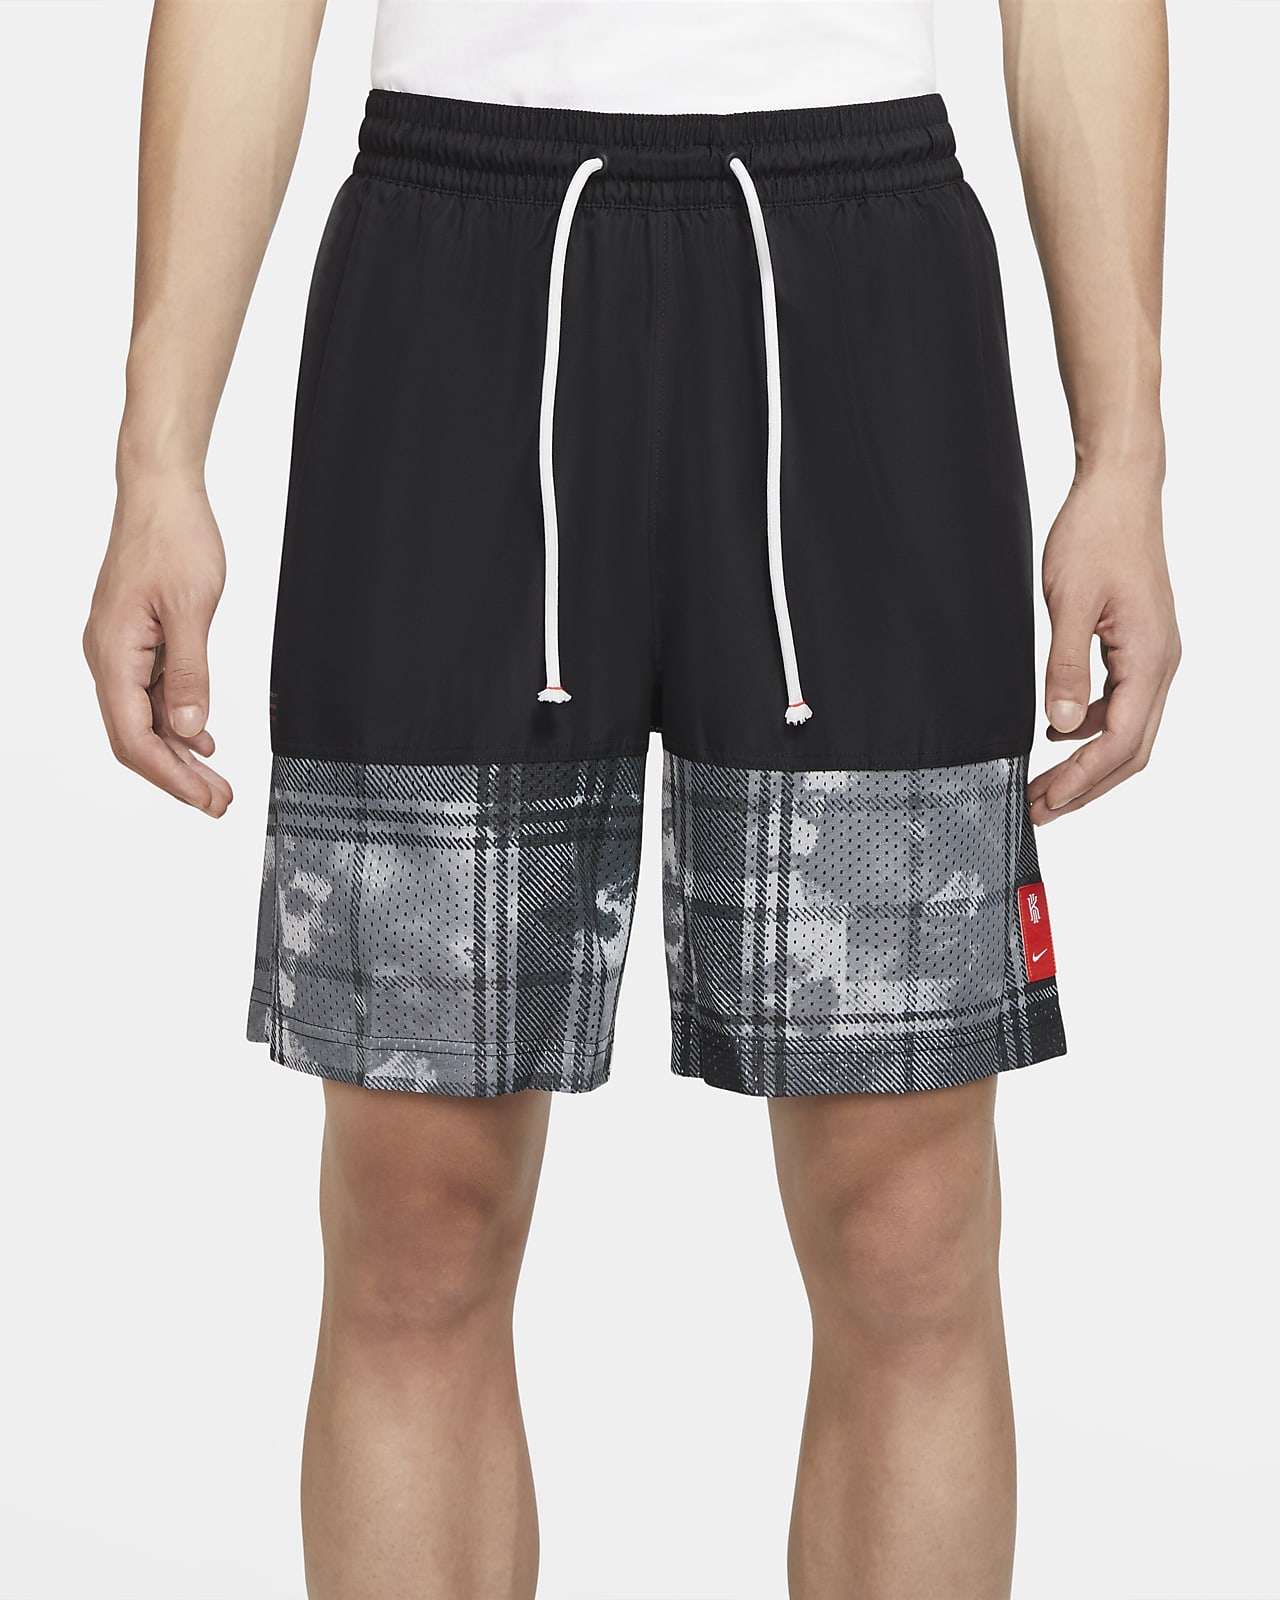 kyrie basketball shorts